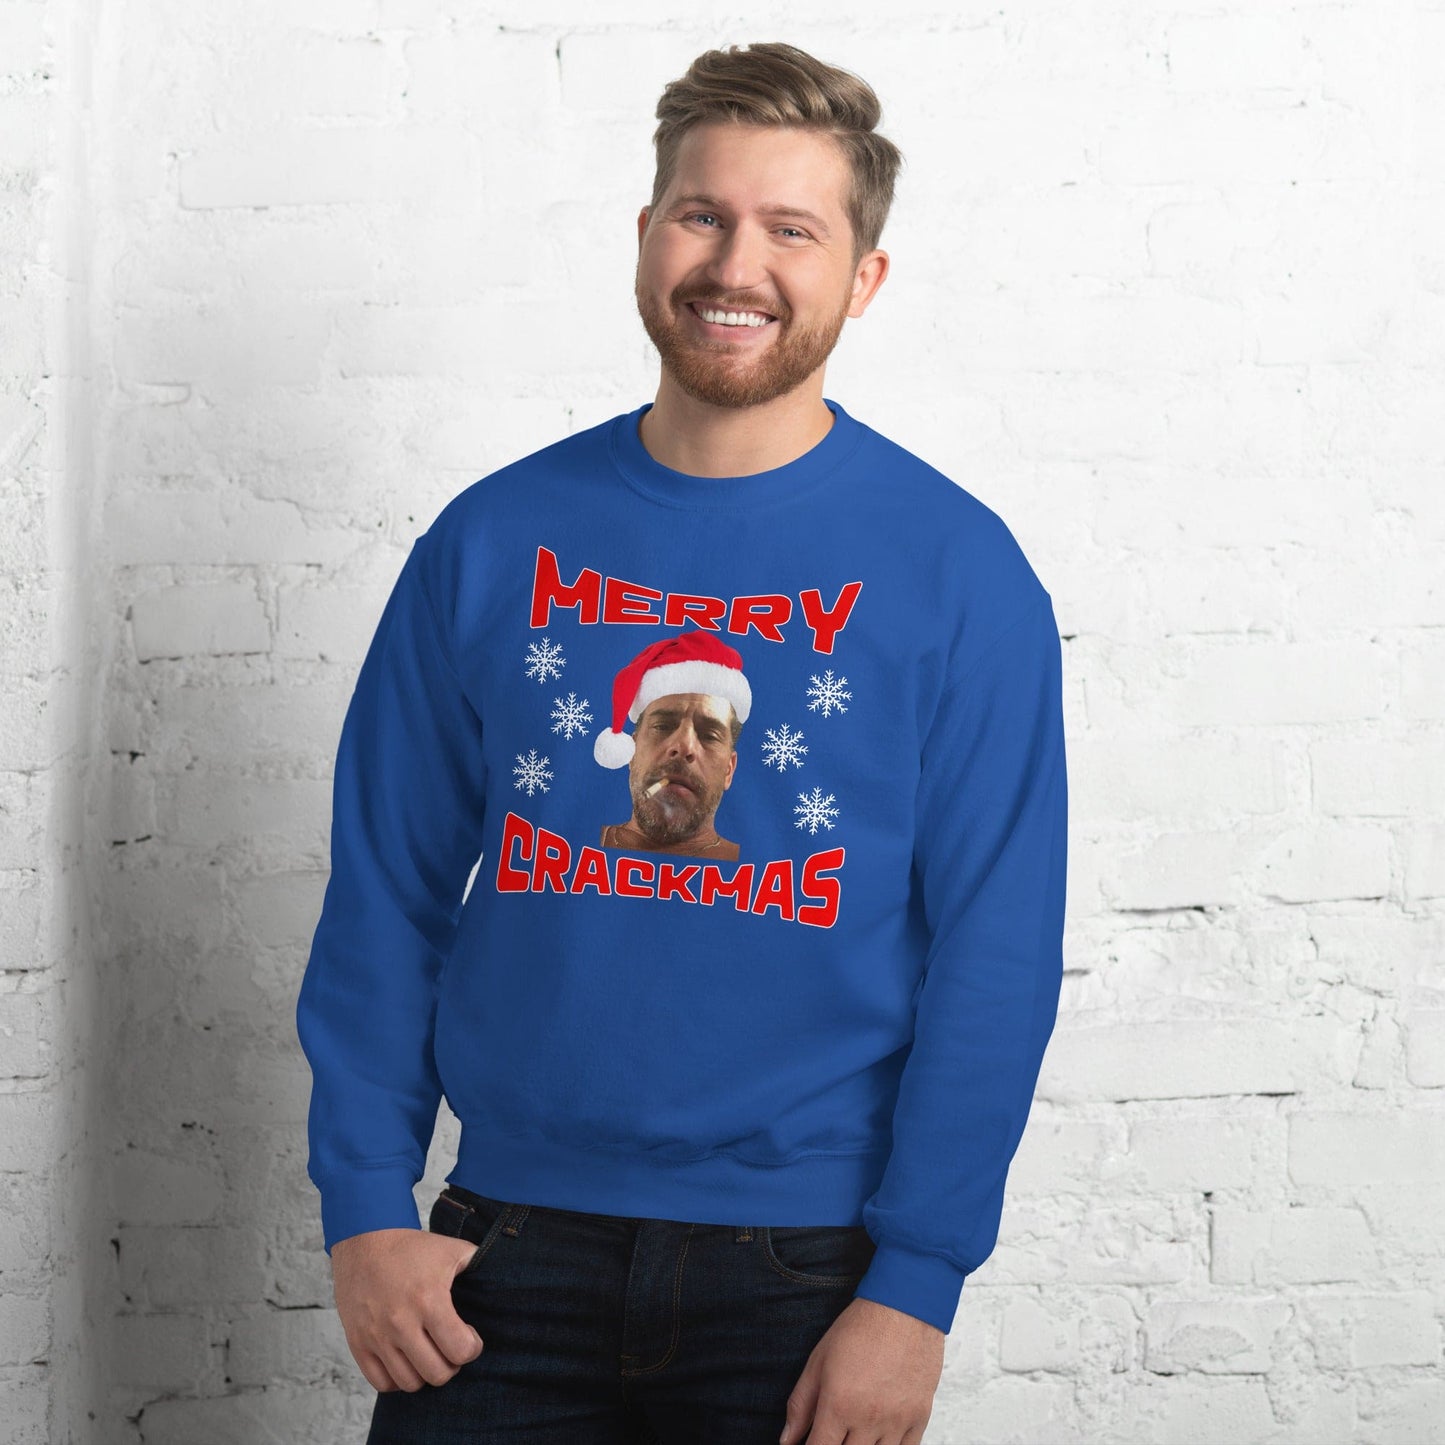 Merry Crackmas Hunter B Funny Christmas Sweater